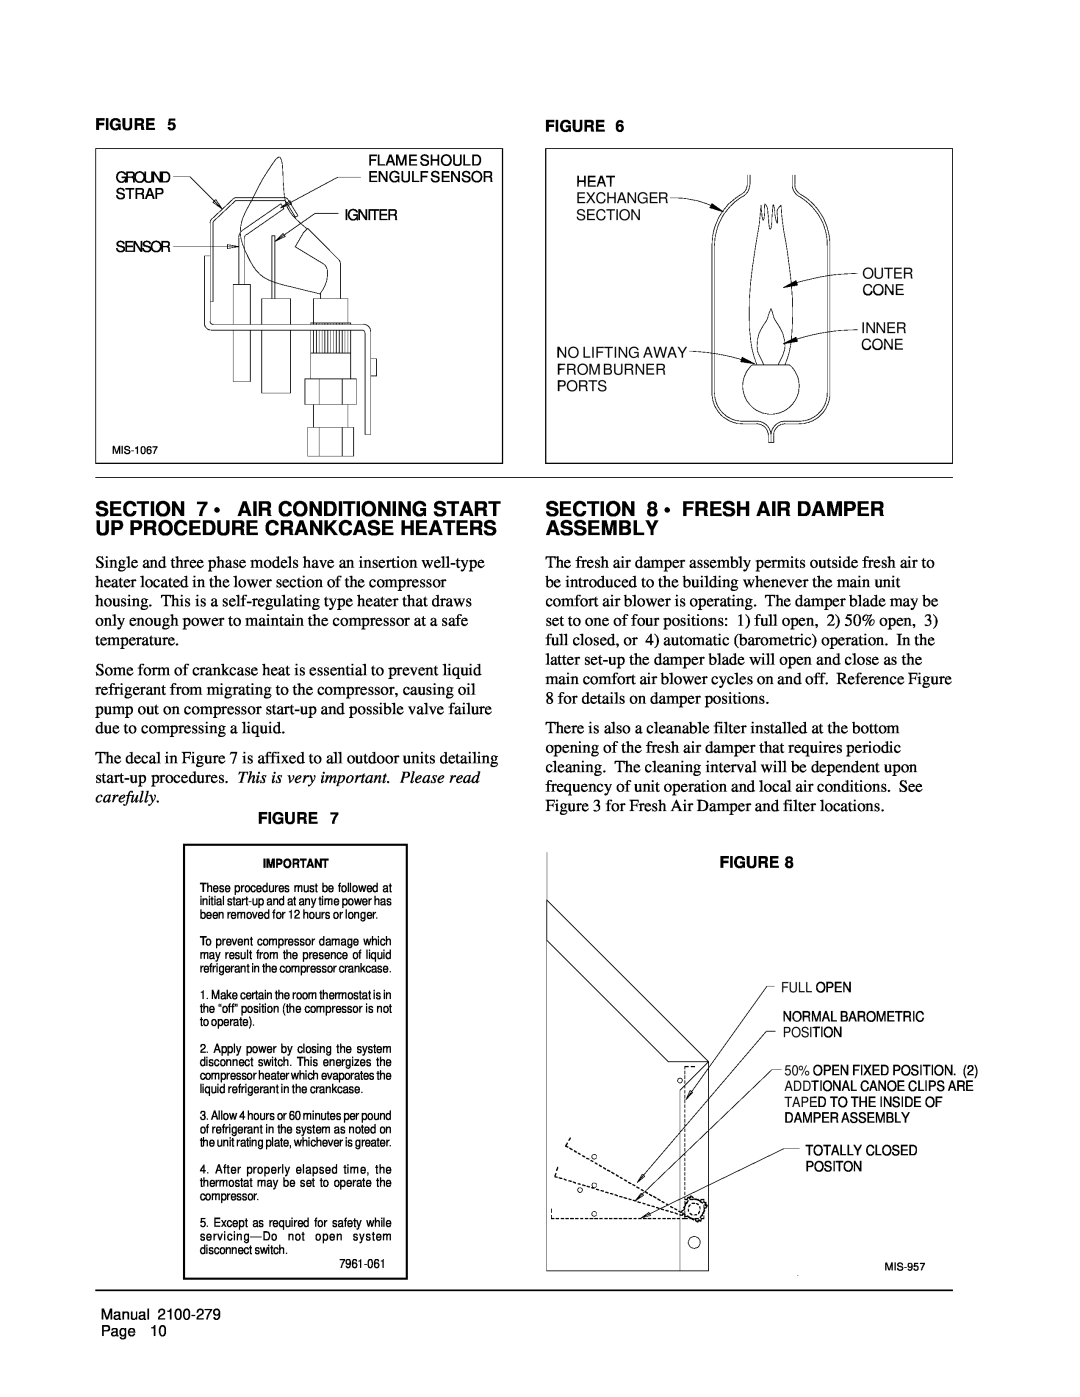 3Com 43506 • Fresh Air Damper Assembly, Flame Should Groundengulf Sensor Strap Igniter, Heat Exchanger Section 